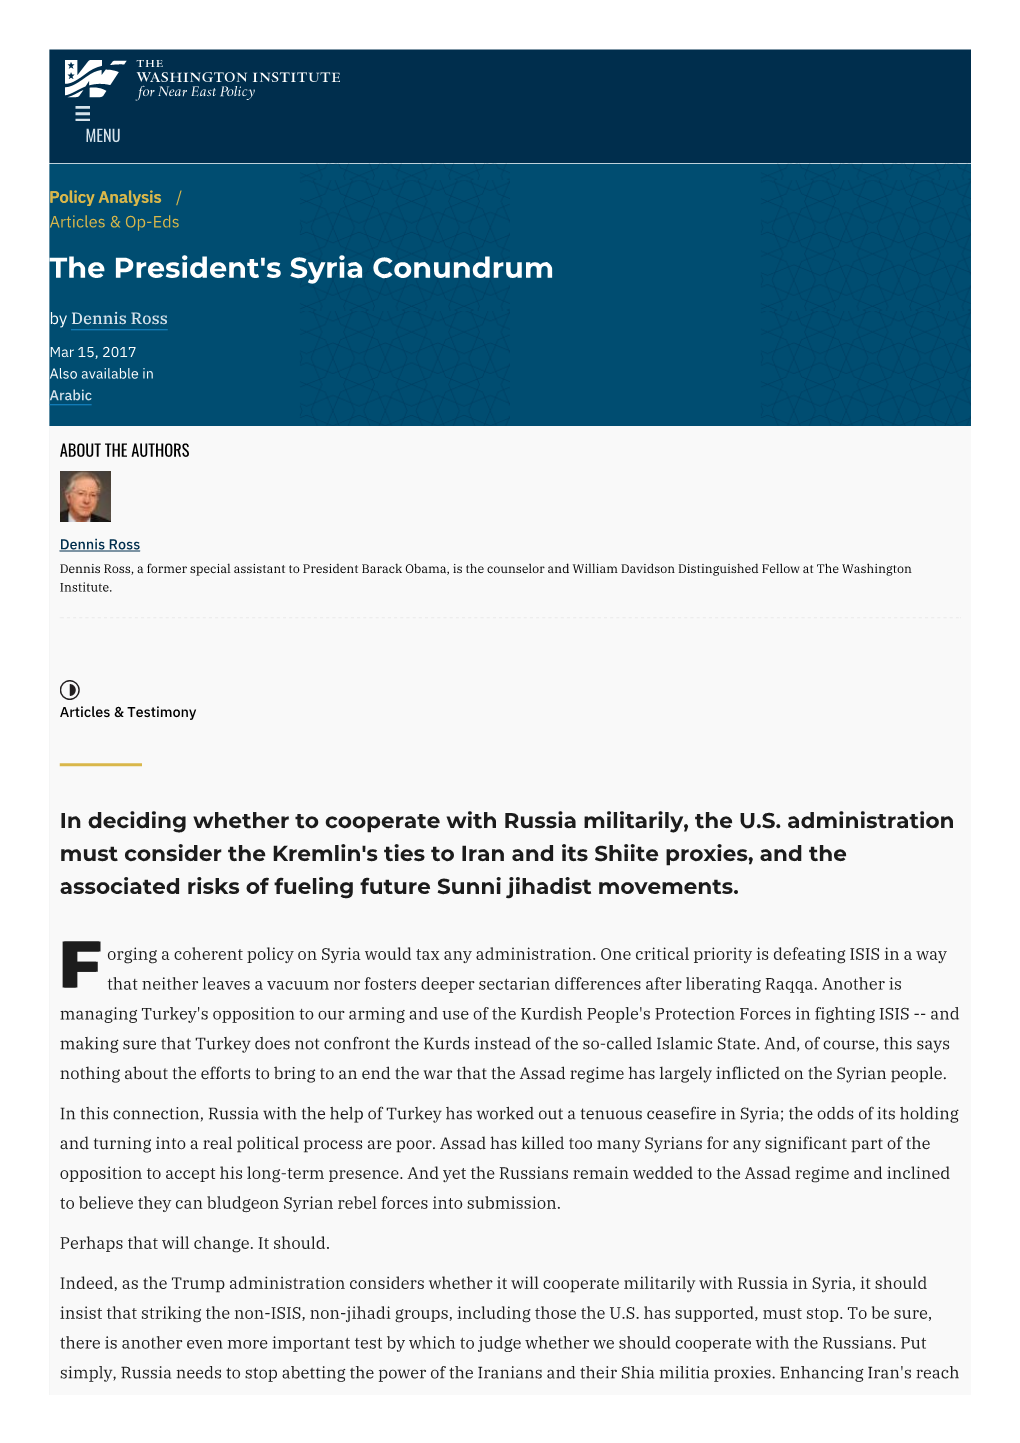 The President's Syria Conundrum | the Washington Institute